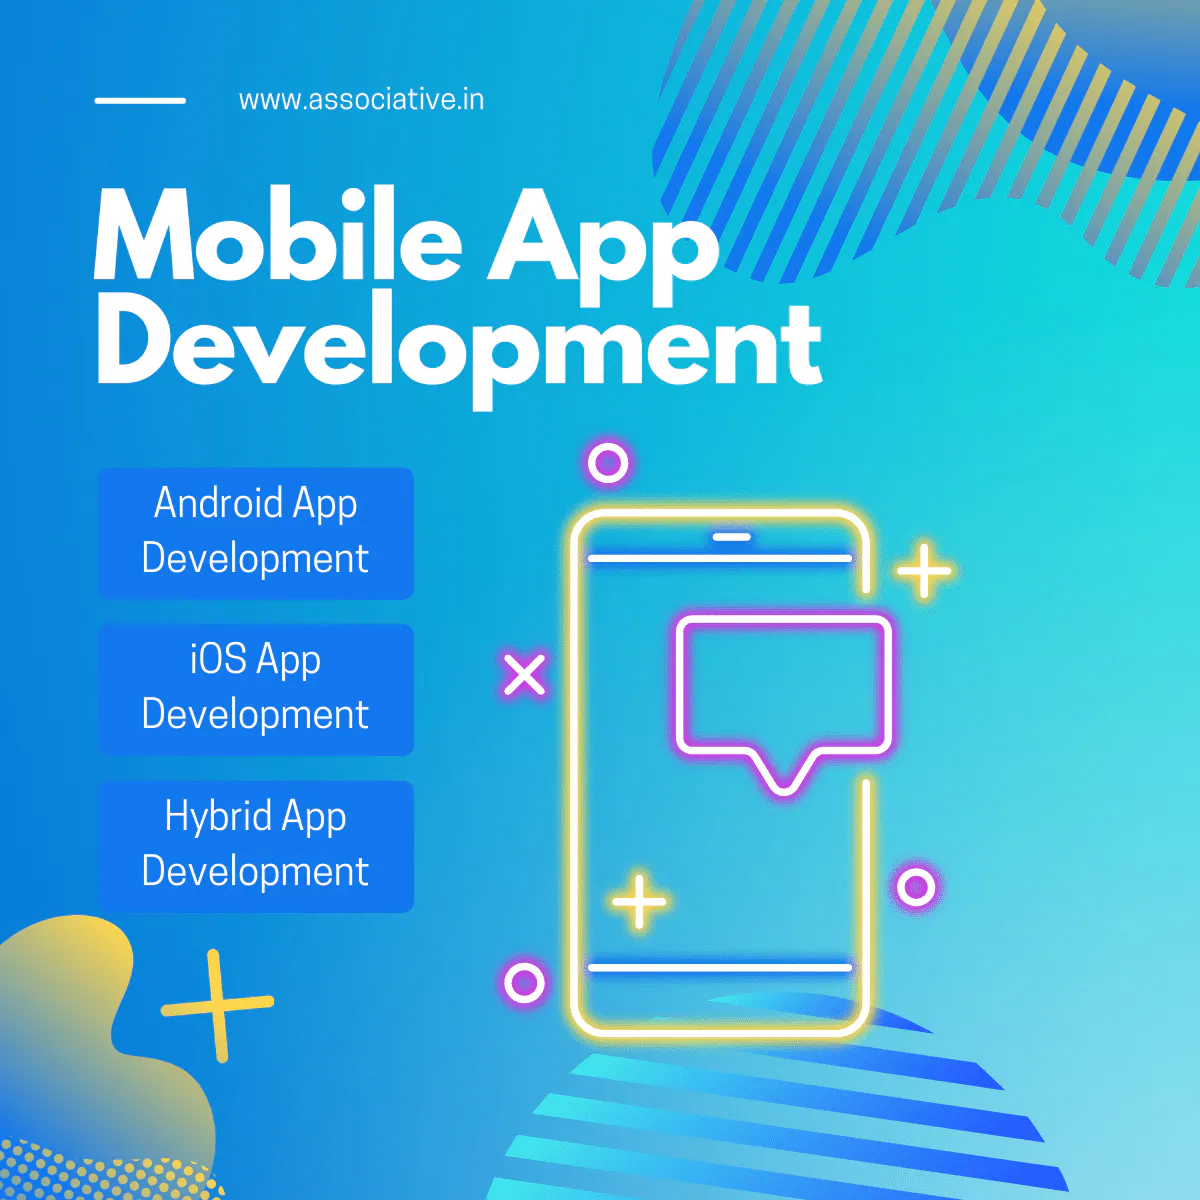 Best Mobile App Developers